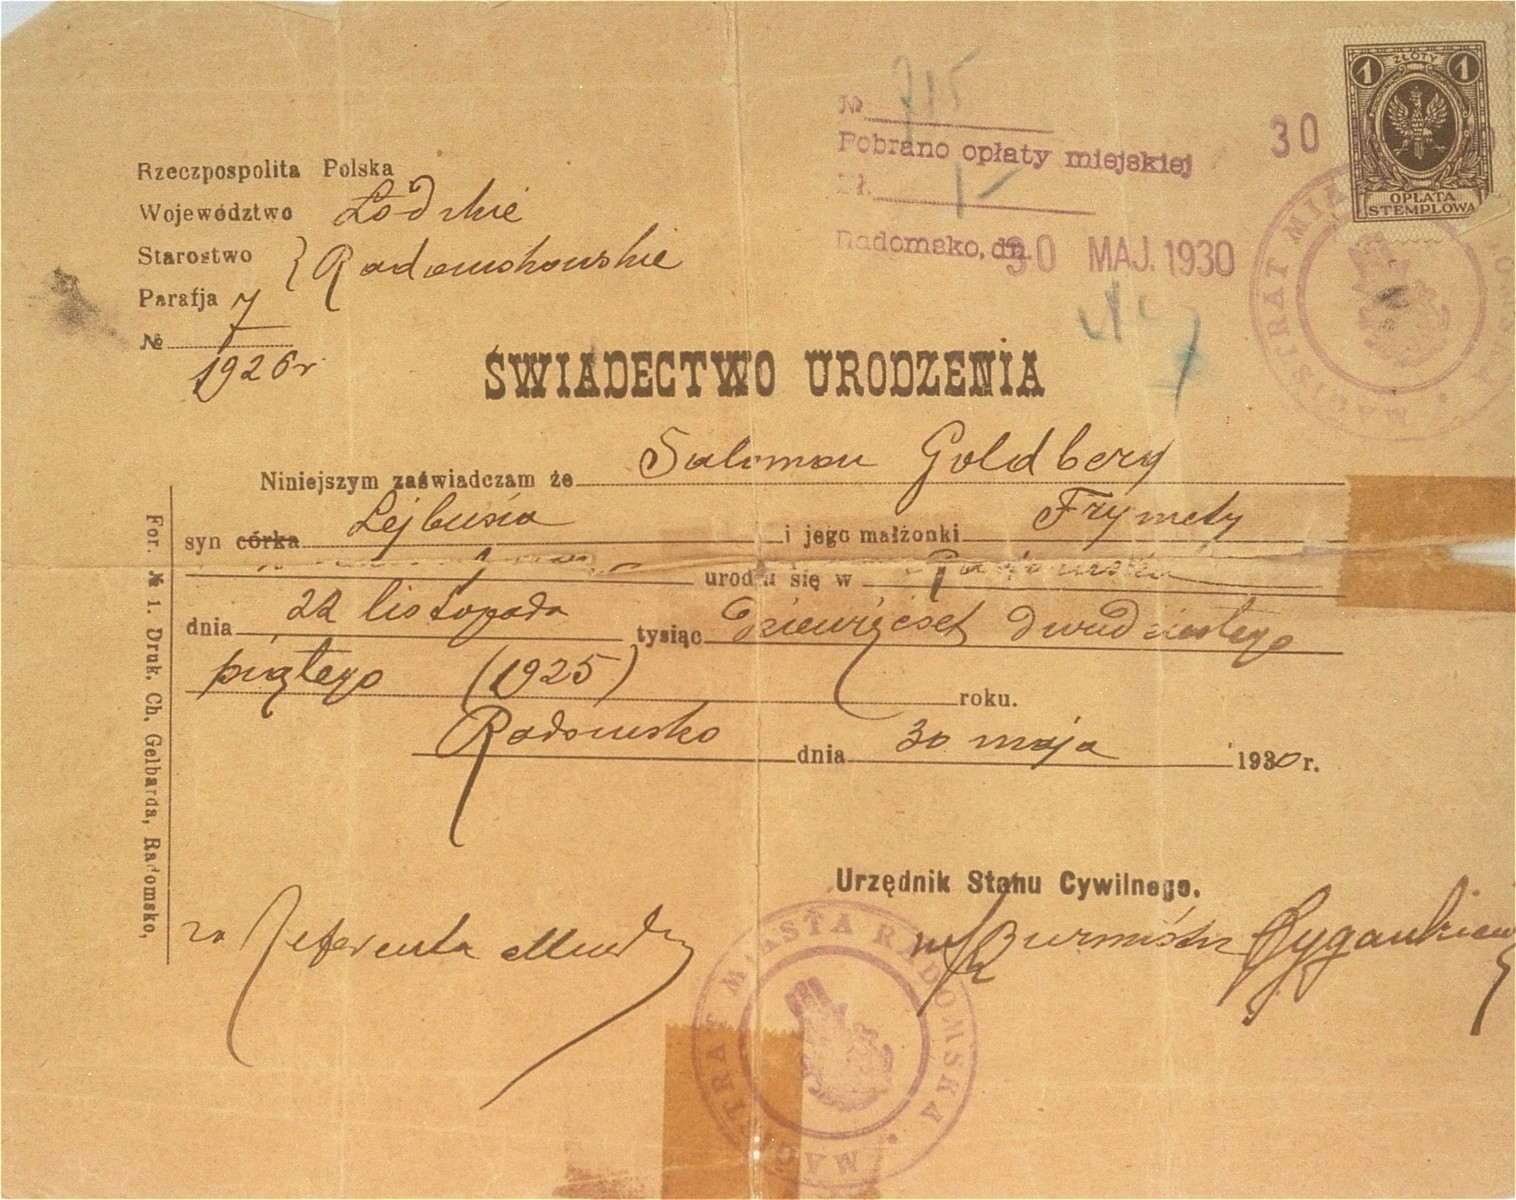 Birth certificate of Szlama Goldberg.